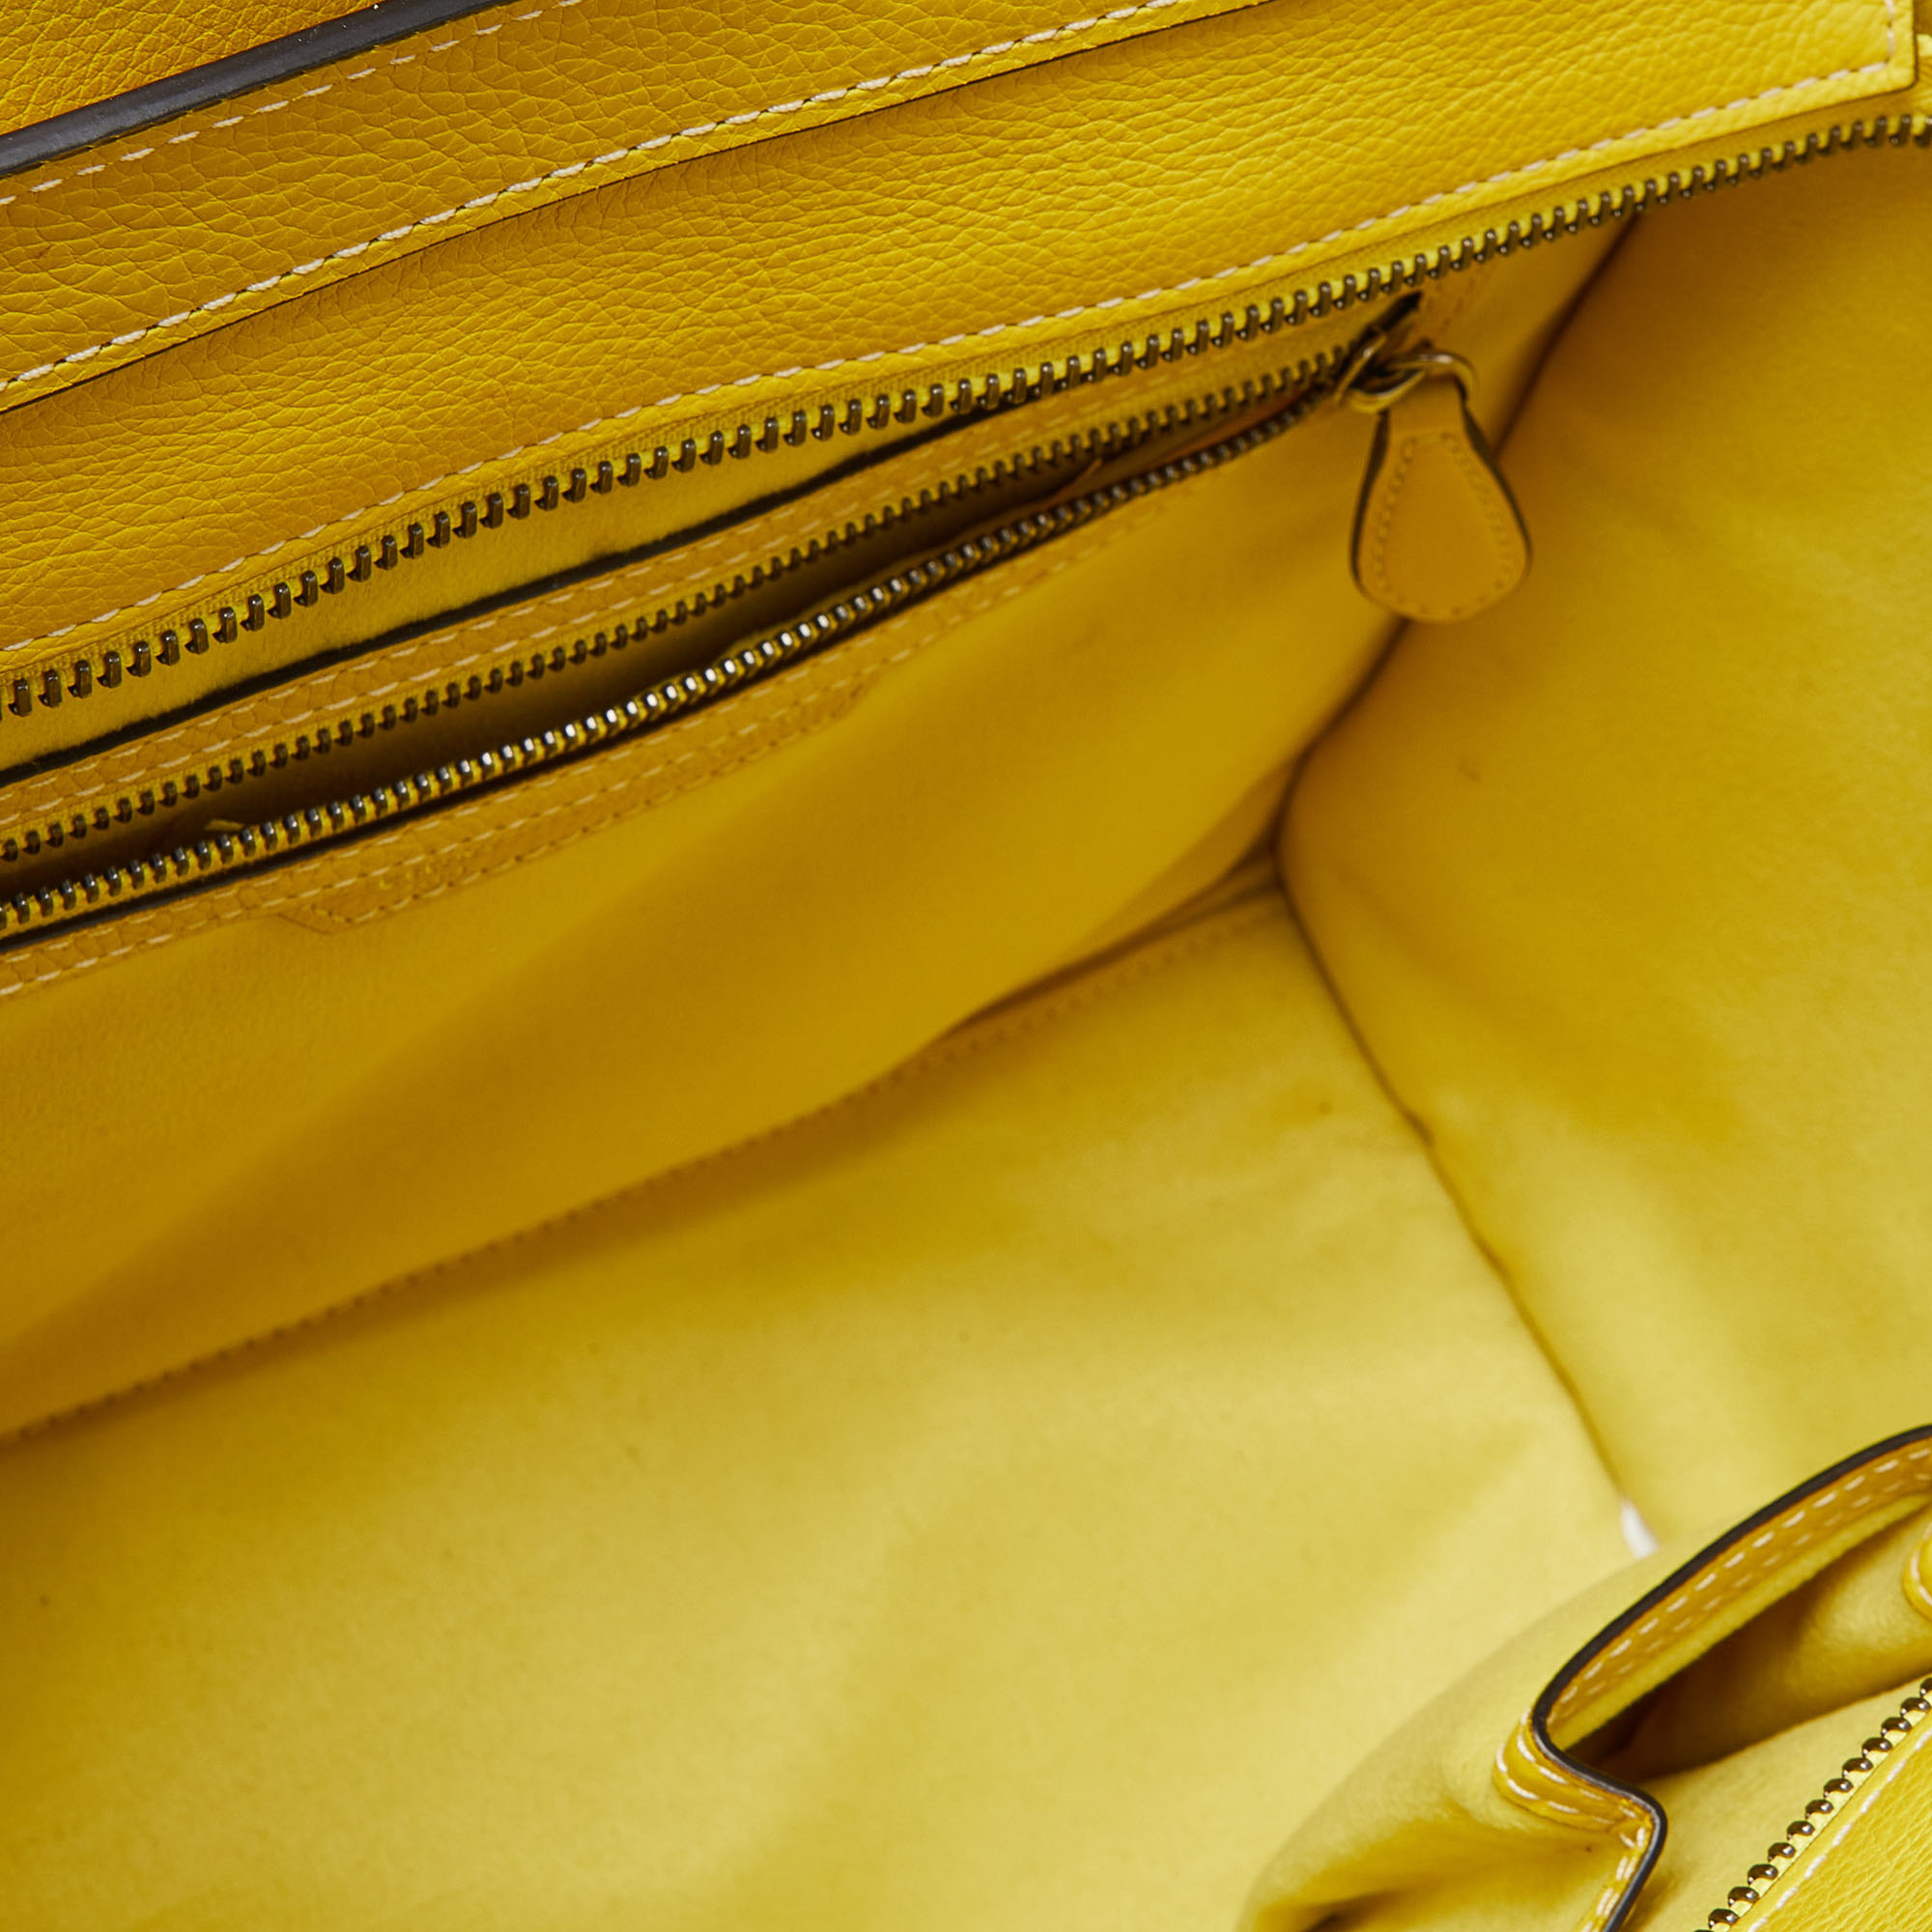 Celine Yellow Leather Mini Luggage Tote